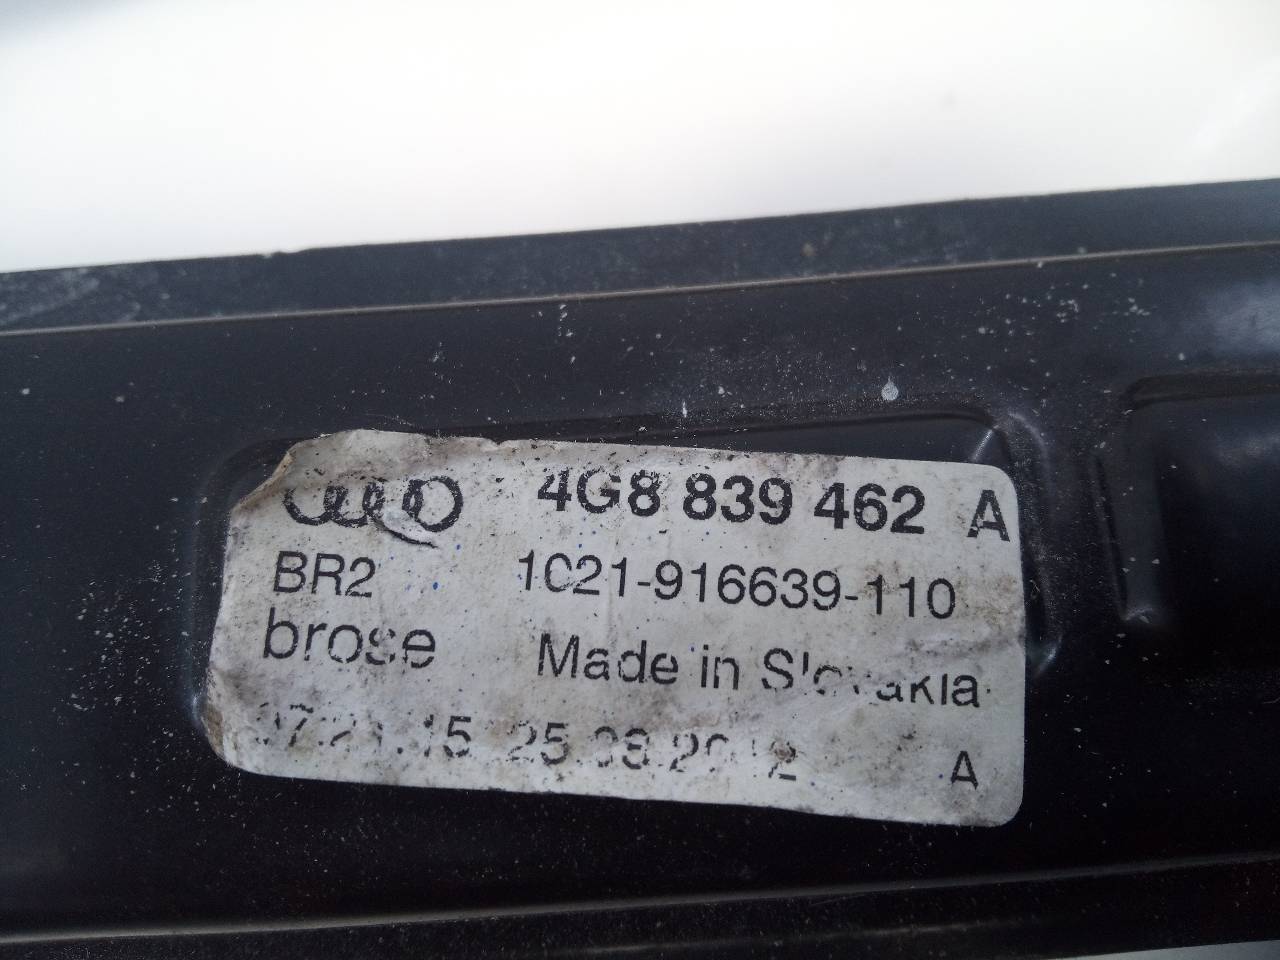 AUDI A6 C7/4G (2010-2020) Стеклоподъемник задней правой двери 4G8839462A, 1C21916639110, E1-A5-39-2 24451923